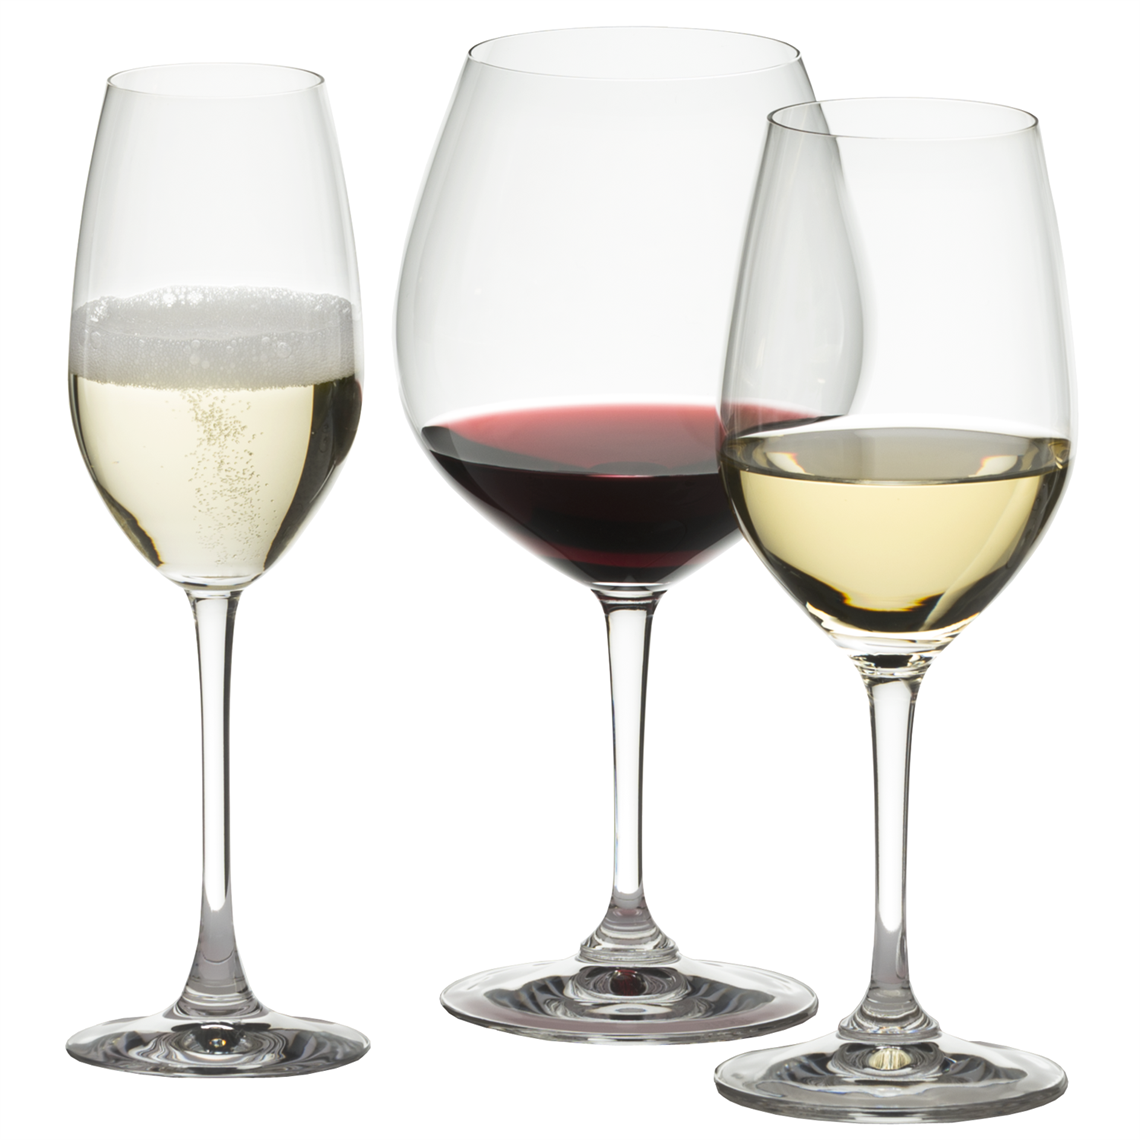 View more what makes iso wine tasting glasses so popular? from our Restaurant & Trade Glasses range